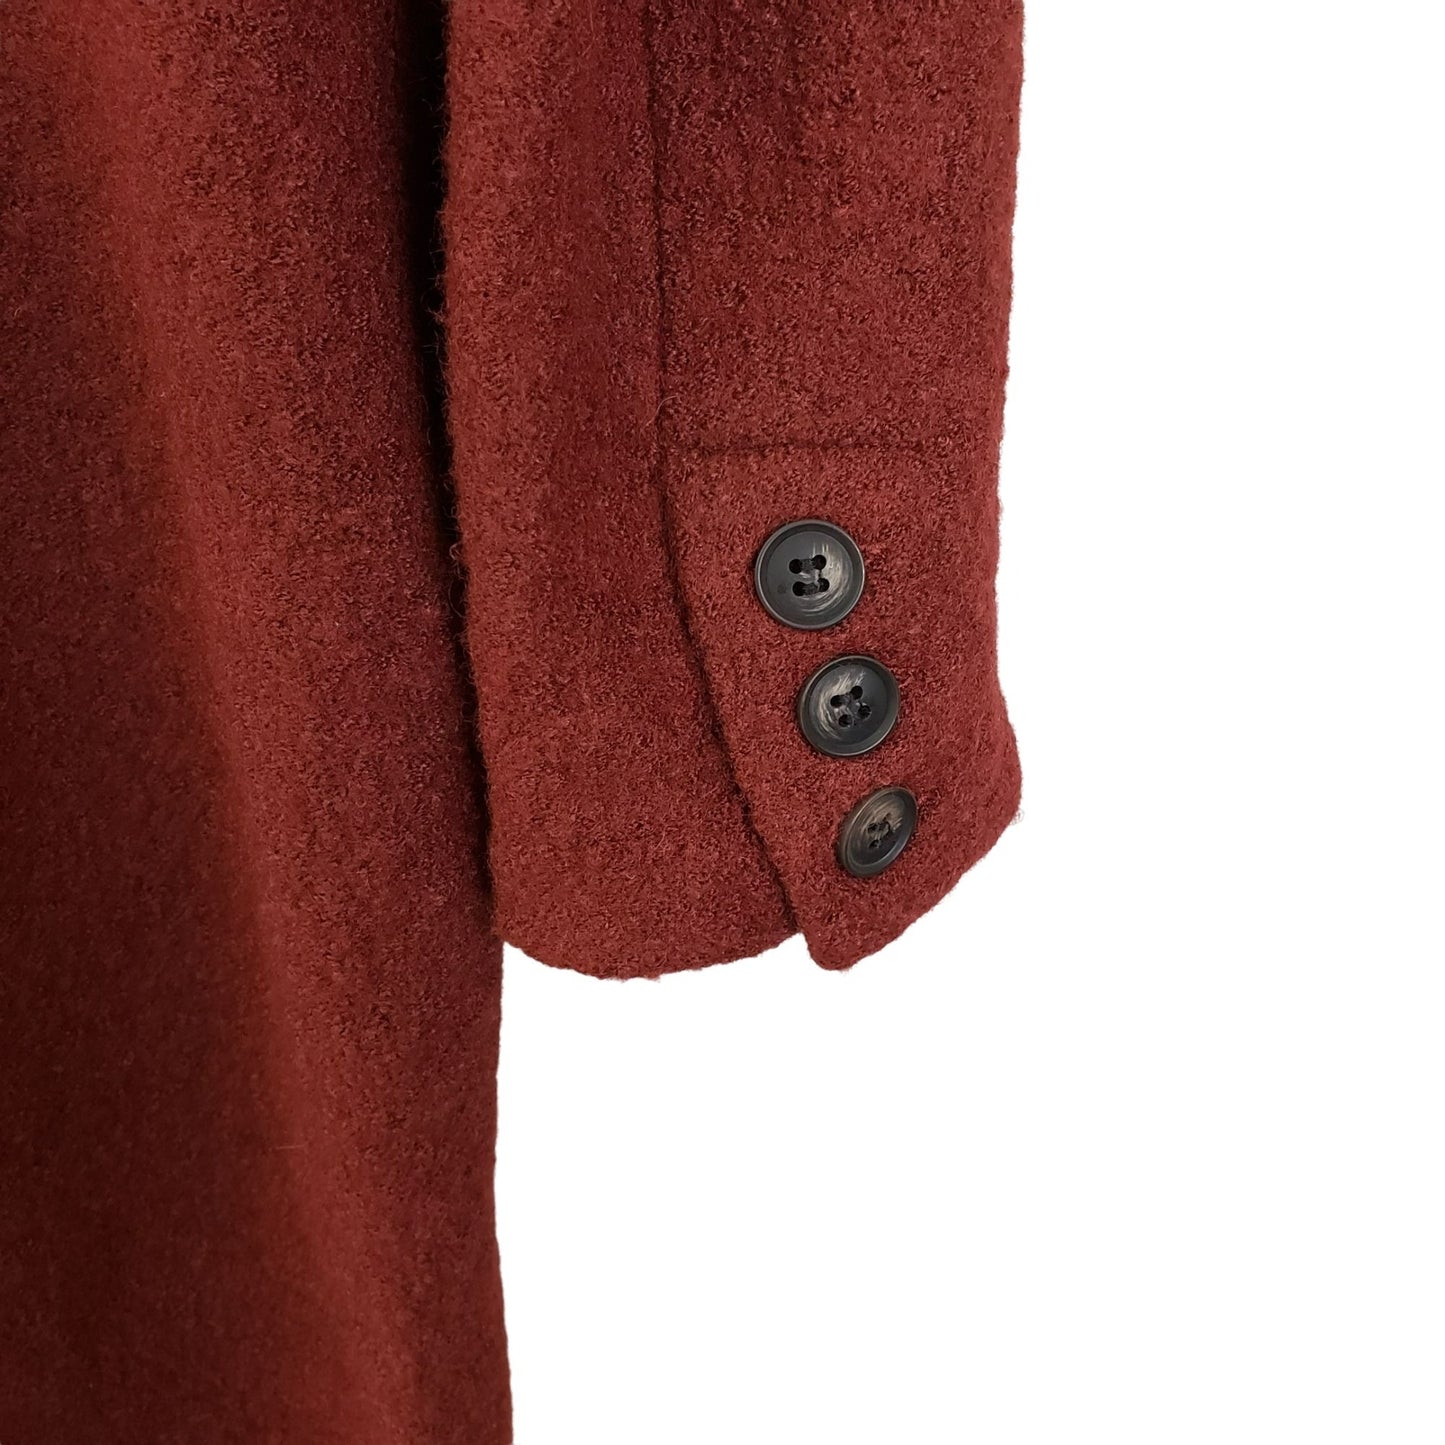 Rachel Zoe Wool Blend Marled Cardigan Shacket Sweater Size Small